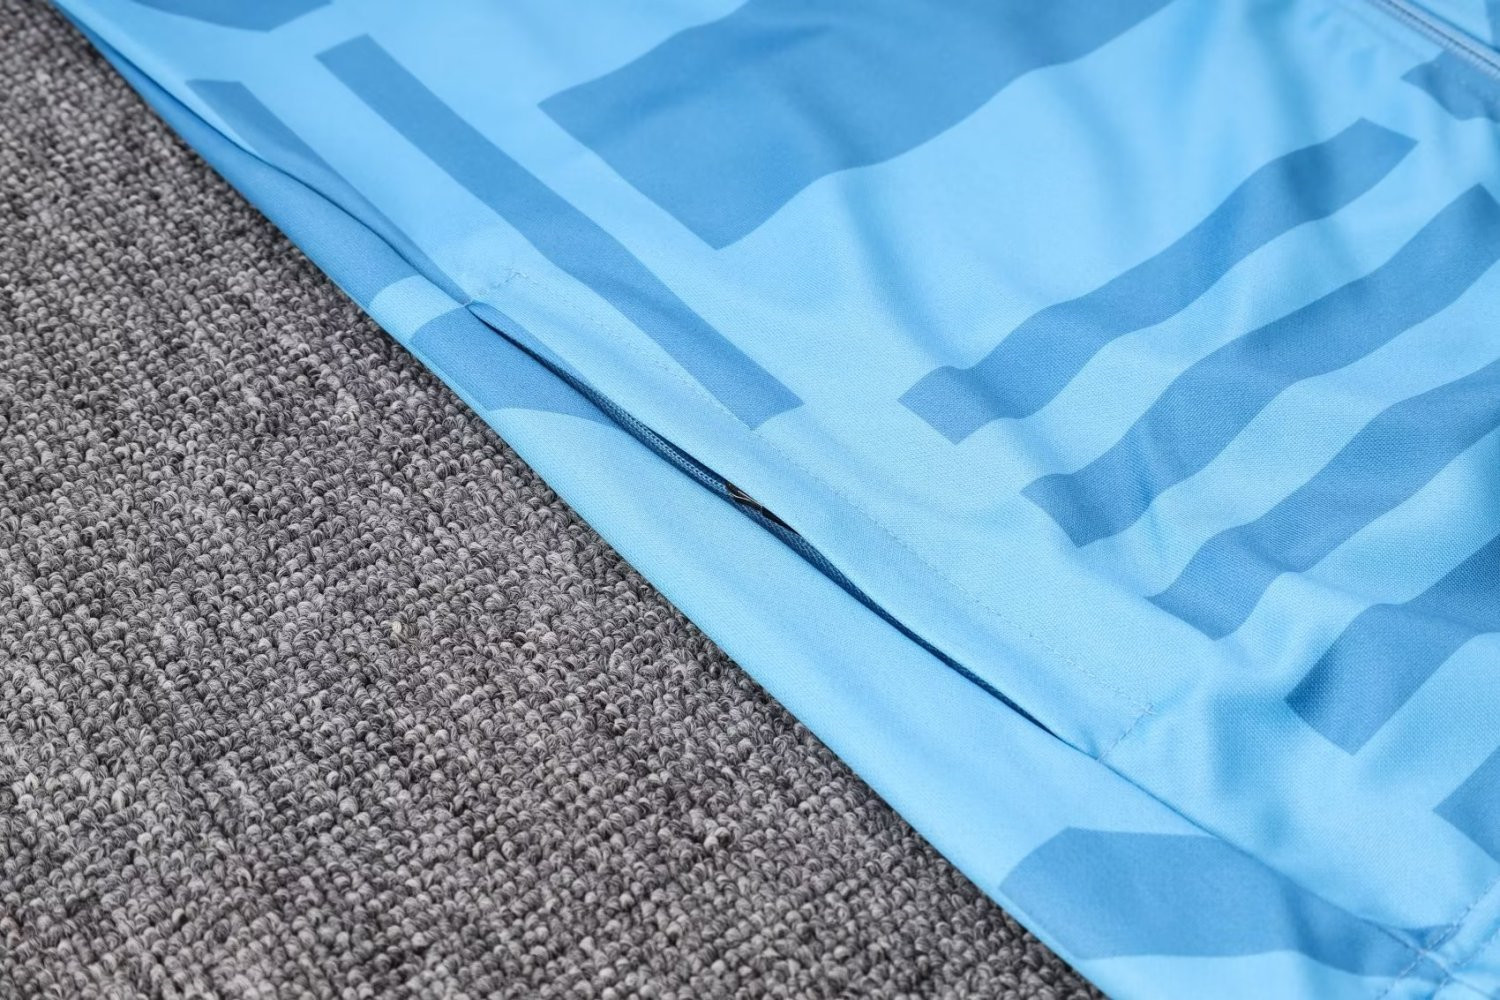 Manchester City Soccer Jacket + Pants Replica Blue 2022/23 Mens